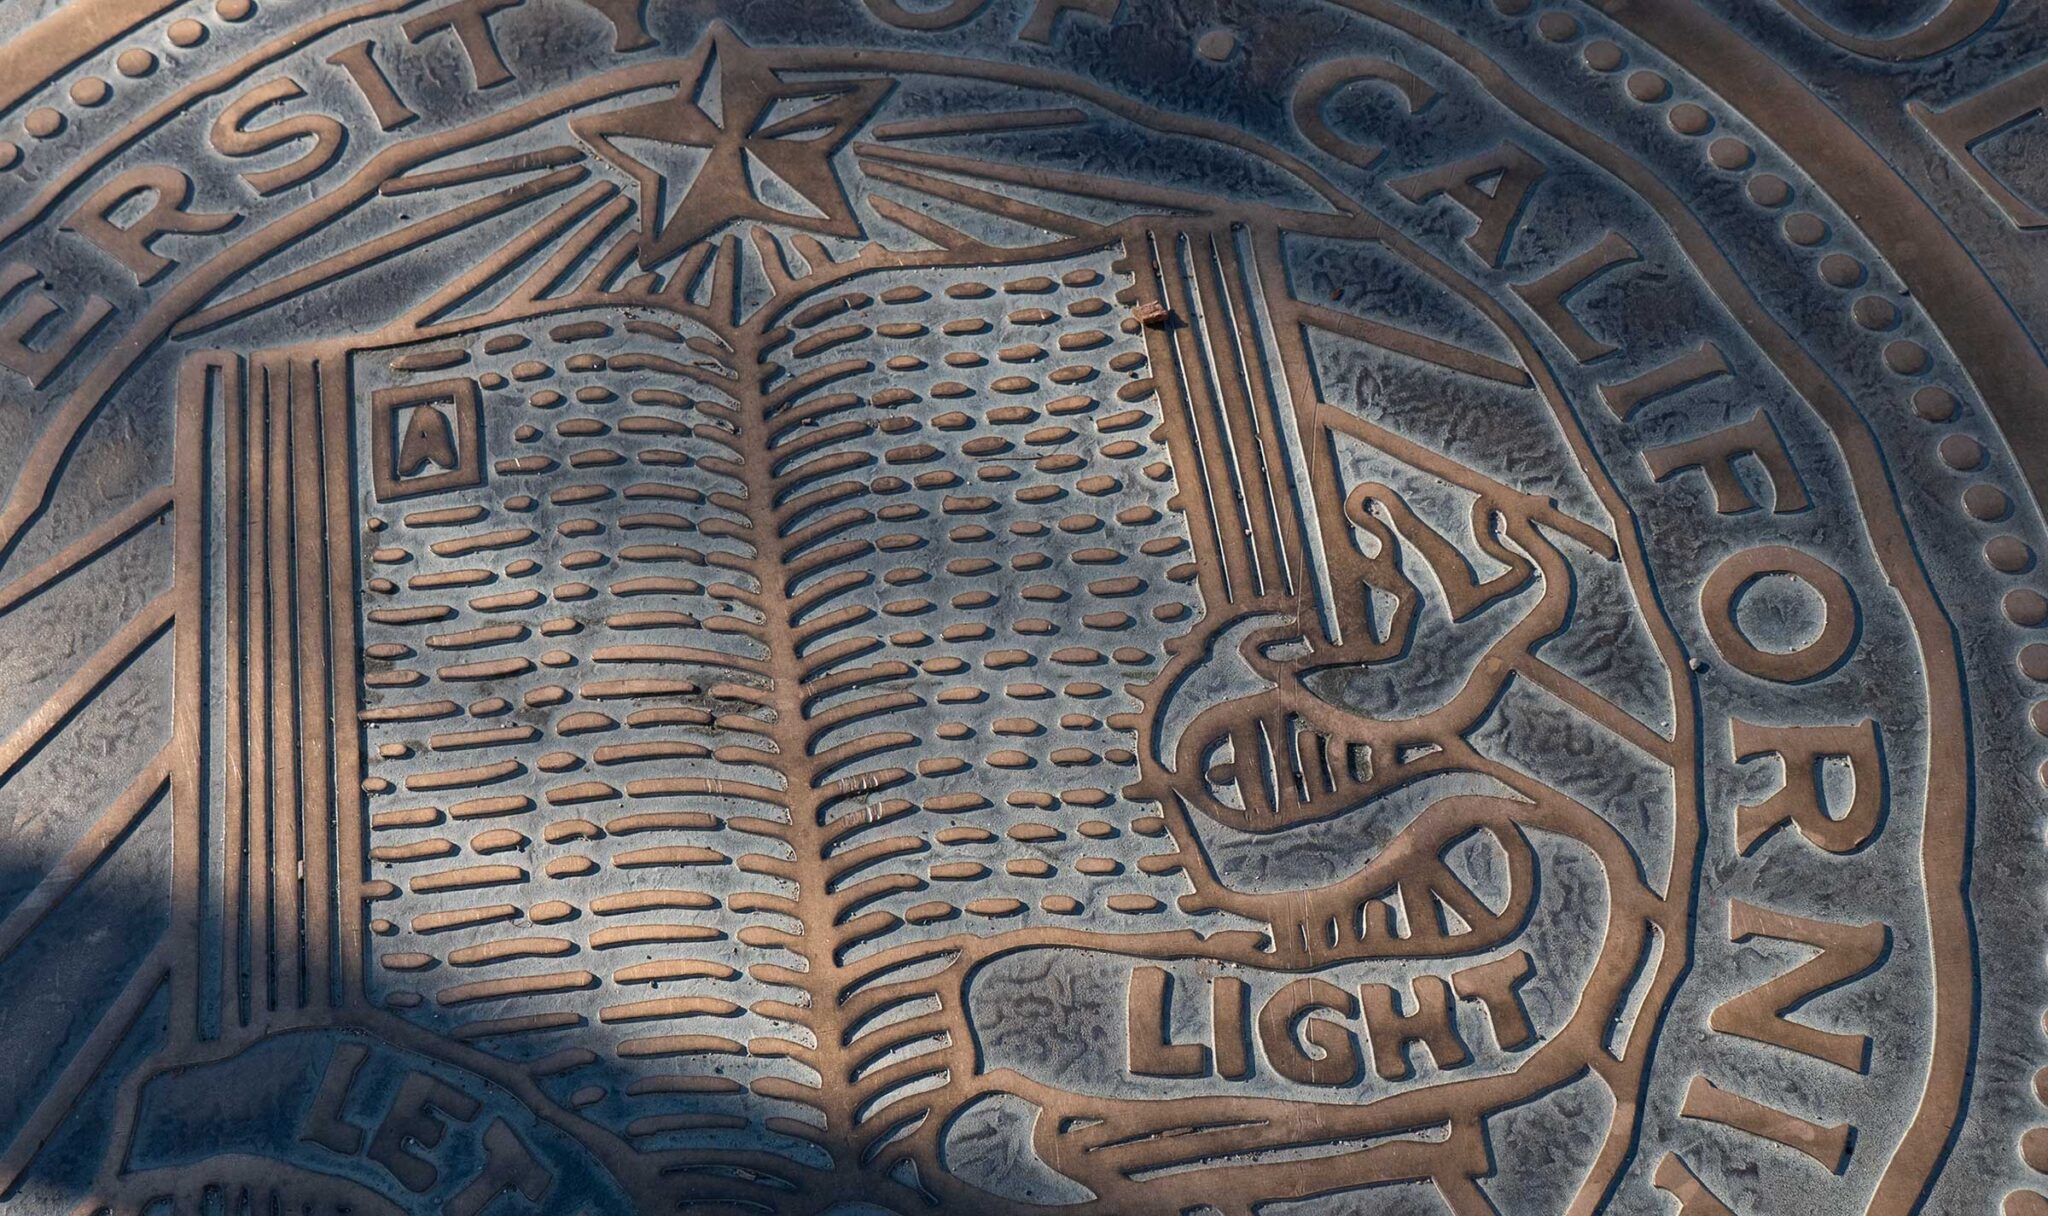 raised detail on the university of california seal